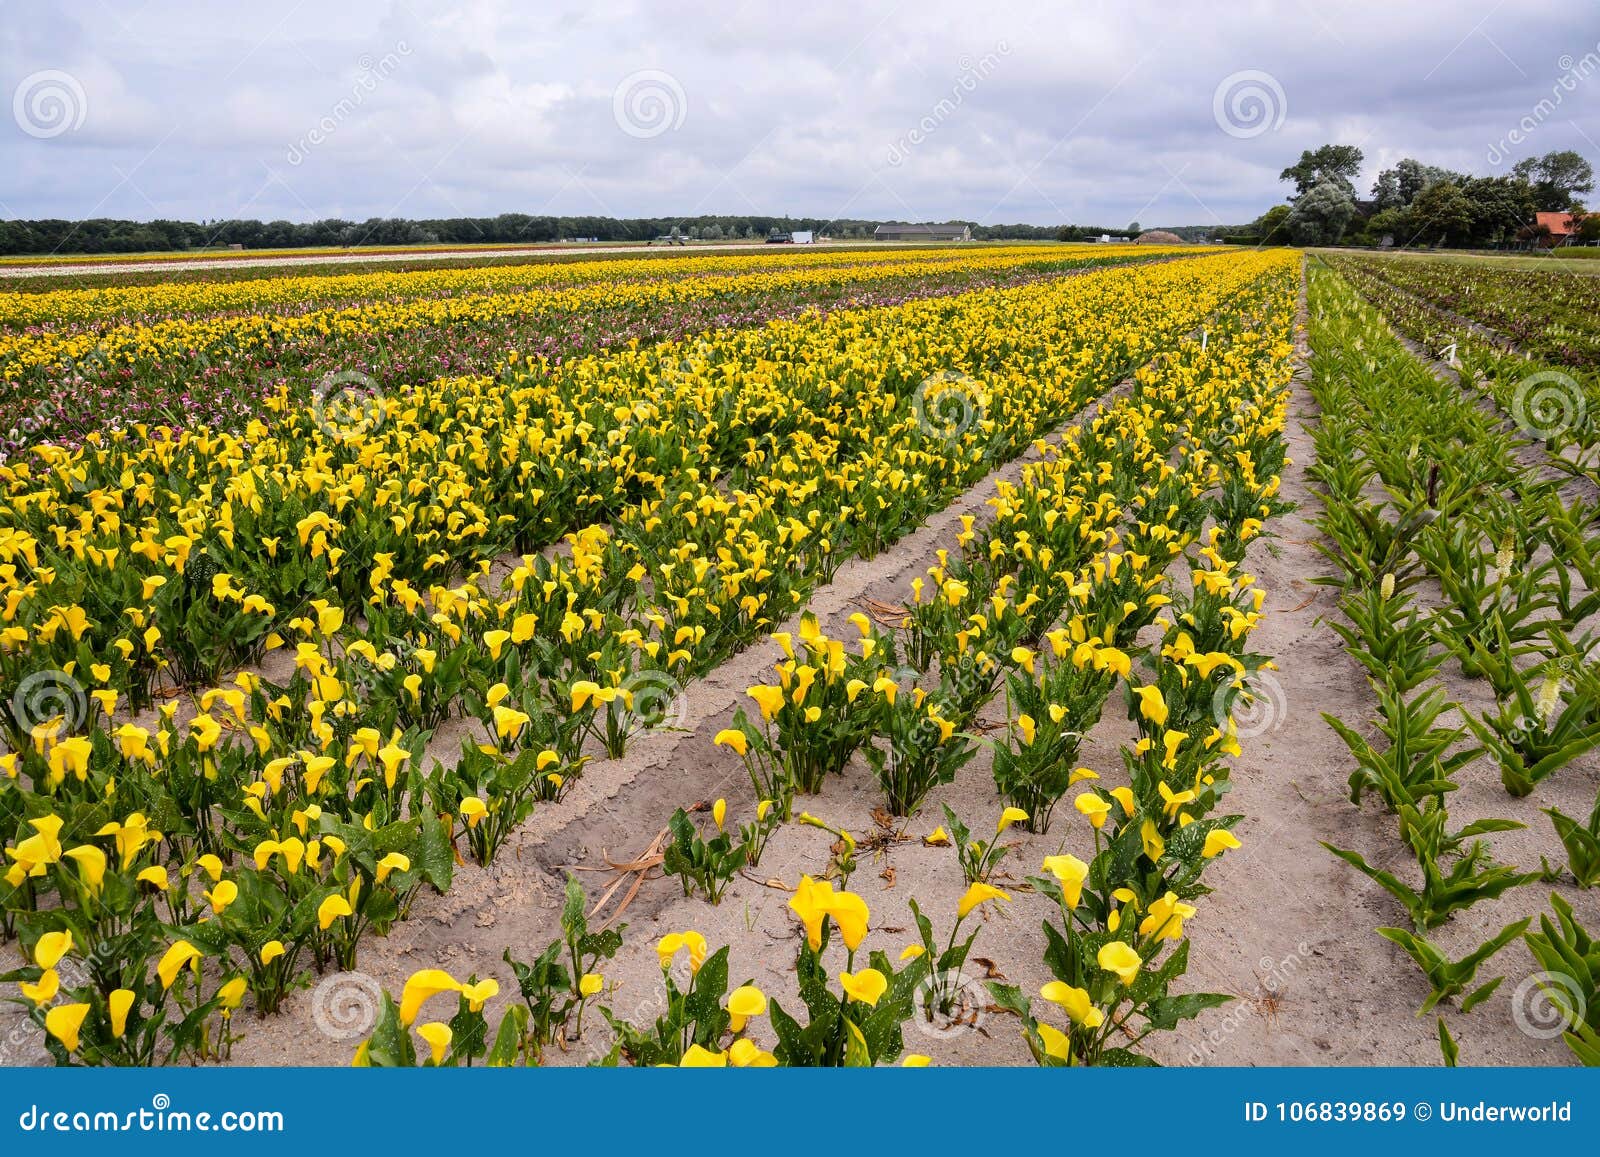 Calla Garden Field Cultivation Stock Image - Image of lilopsida ...